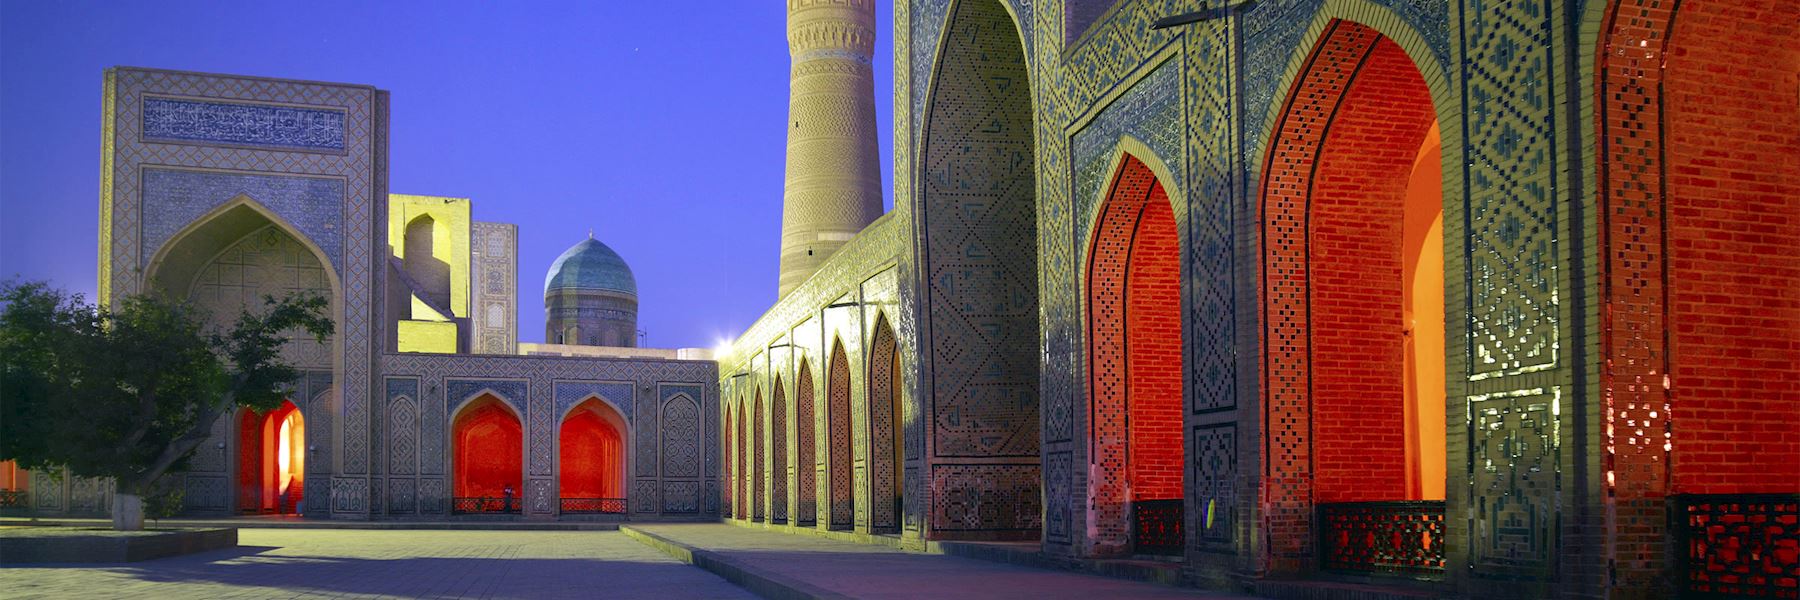 Places to visit in Uzbekistan | Audley Travel